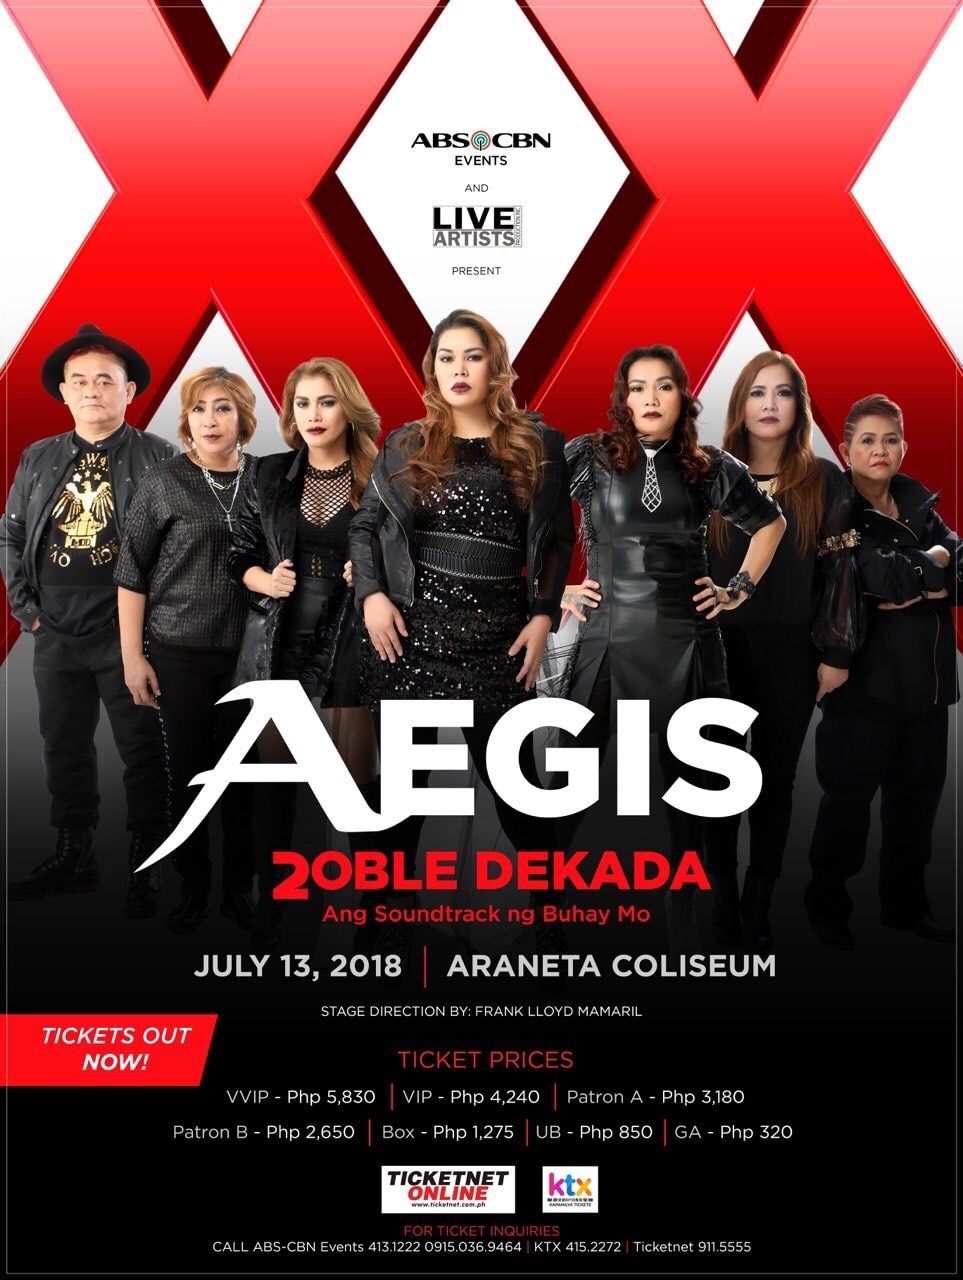 Aegis celebrates 20th anniversary with major concert